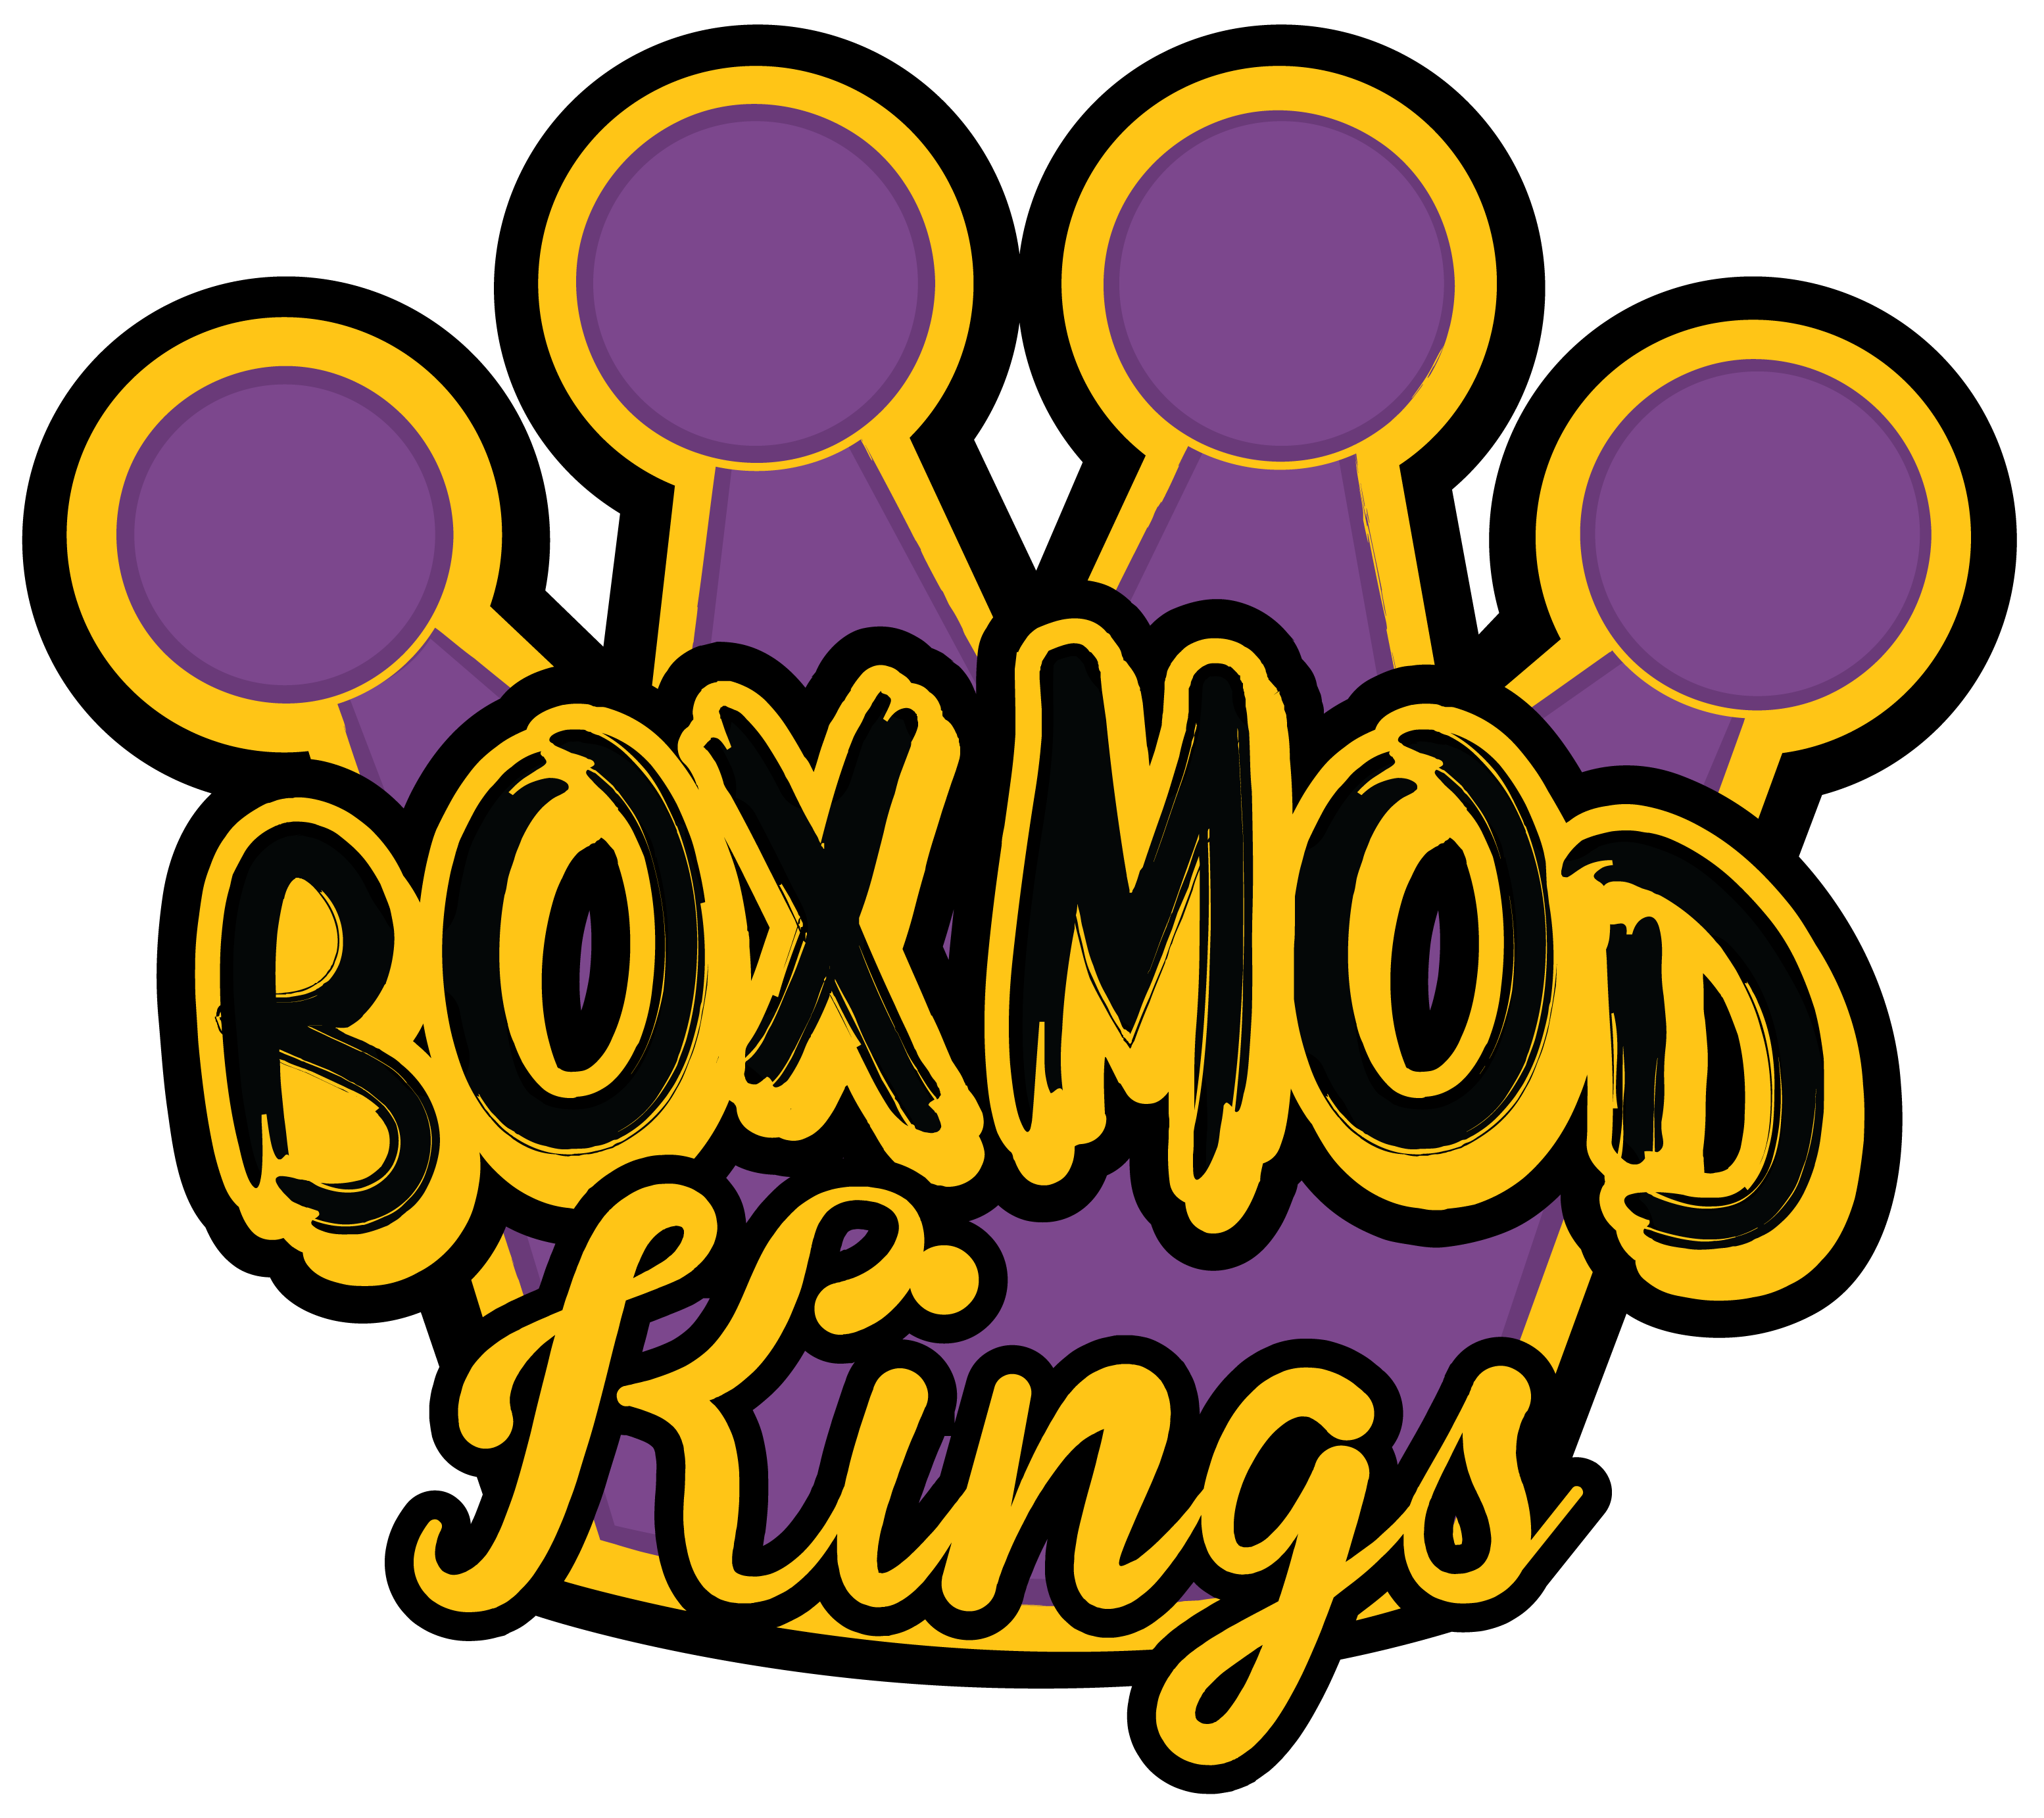 Box Mod Kings